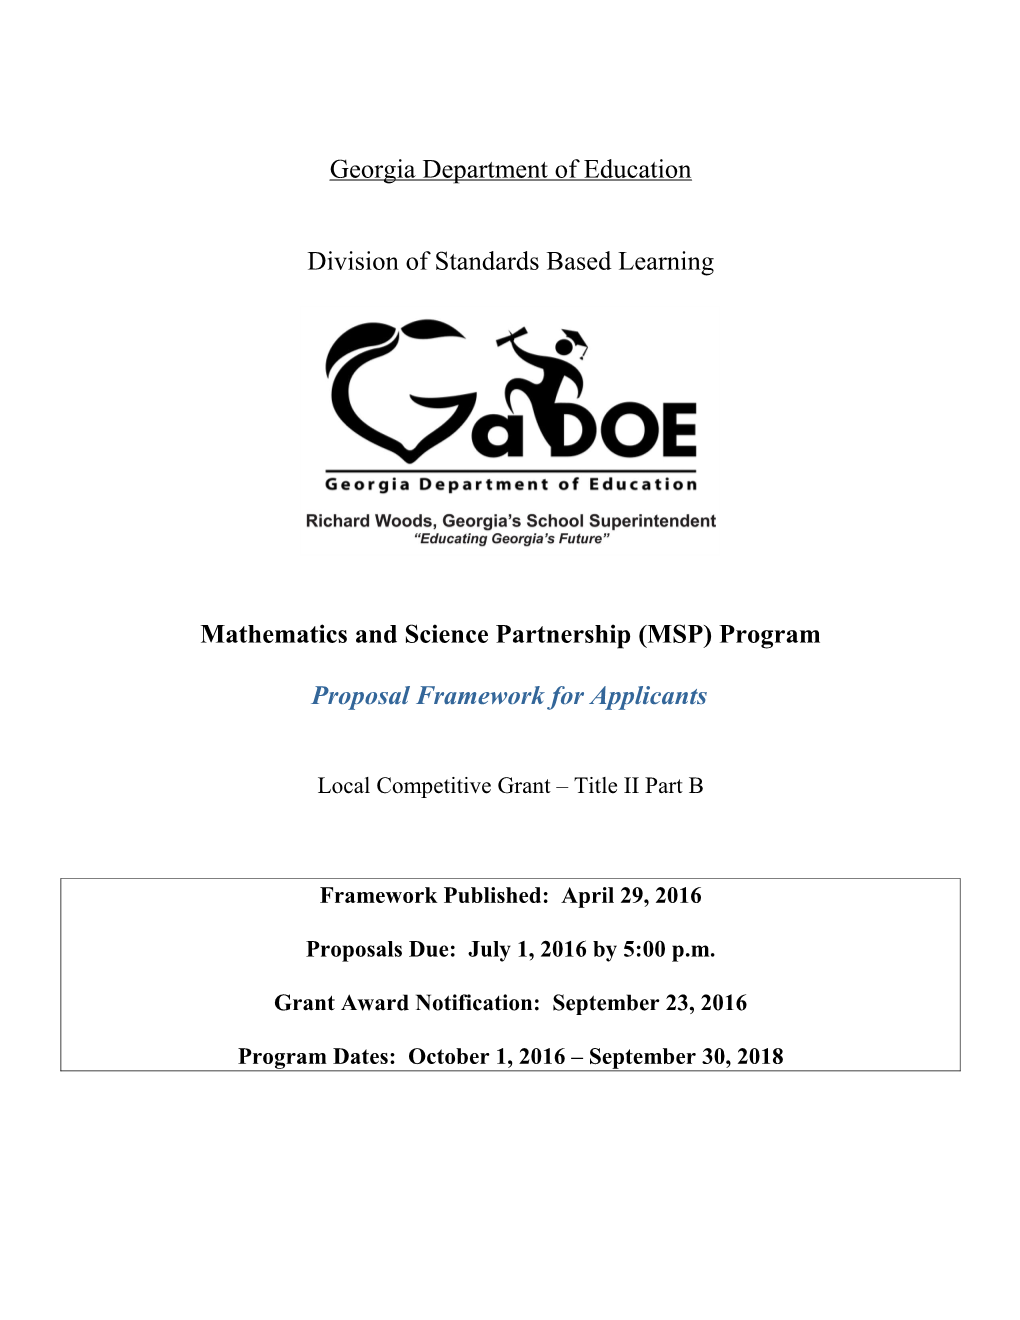 Mathematics and Science Partnership (MSP) Program